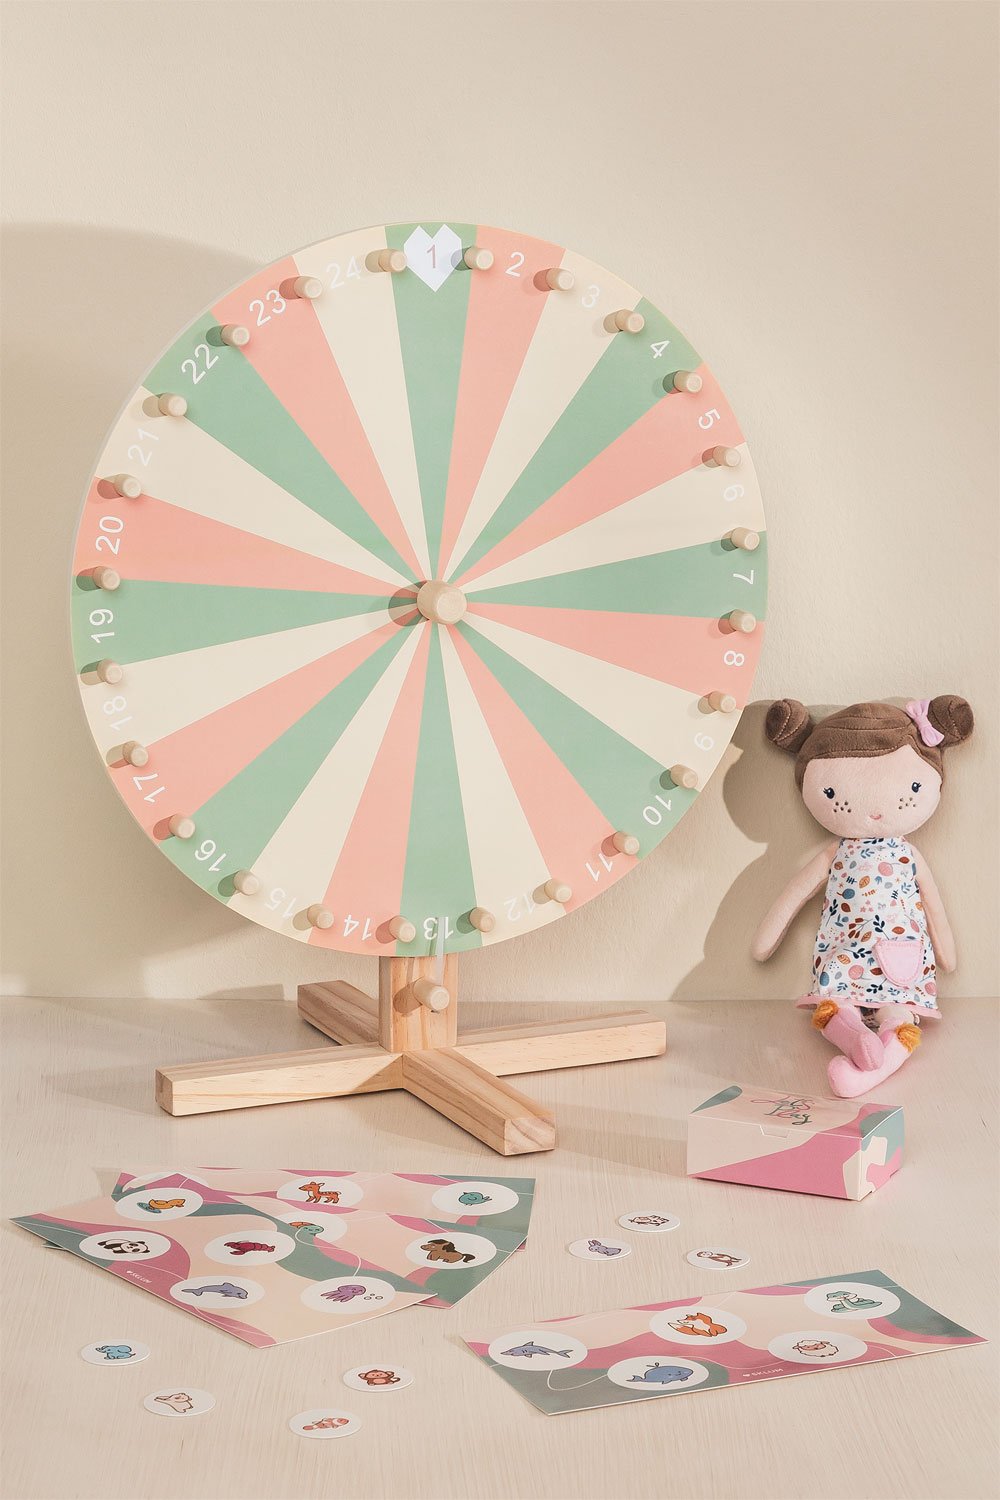 Wheel of Luck Bettina Kids, gallery image 1